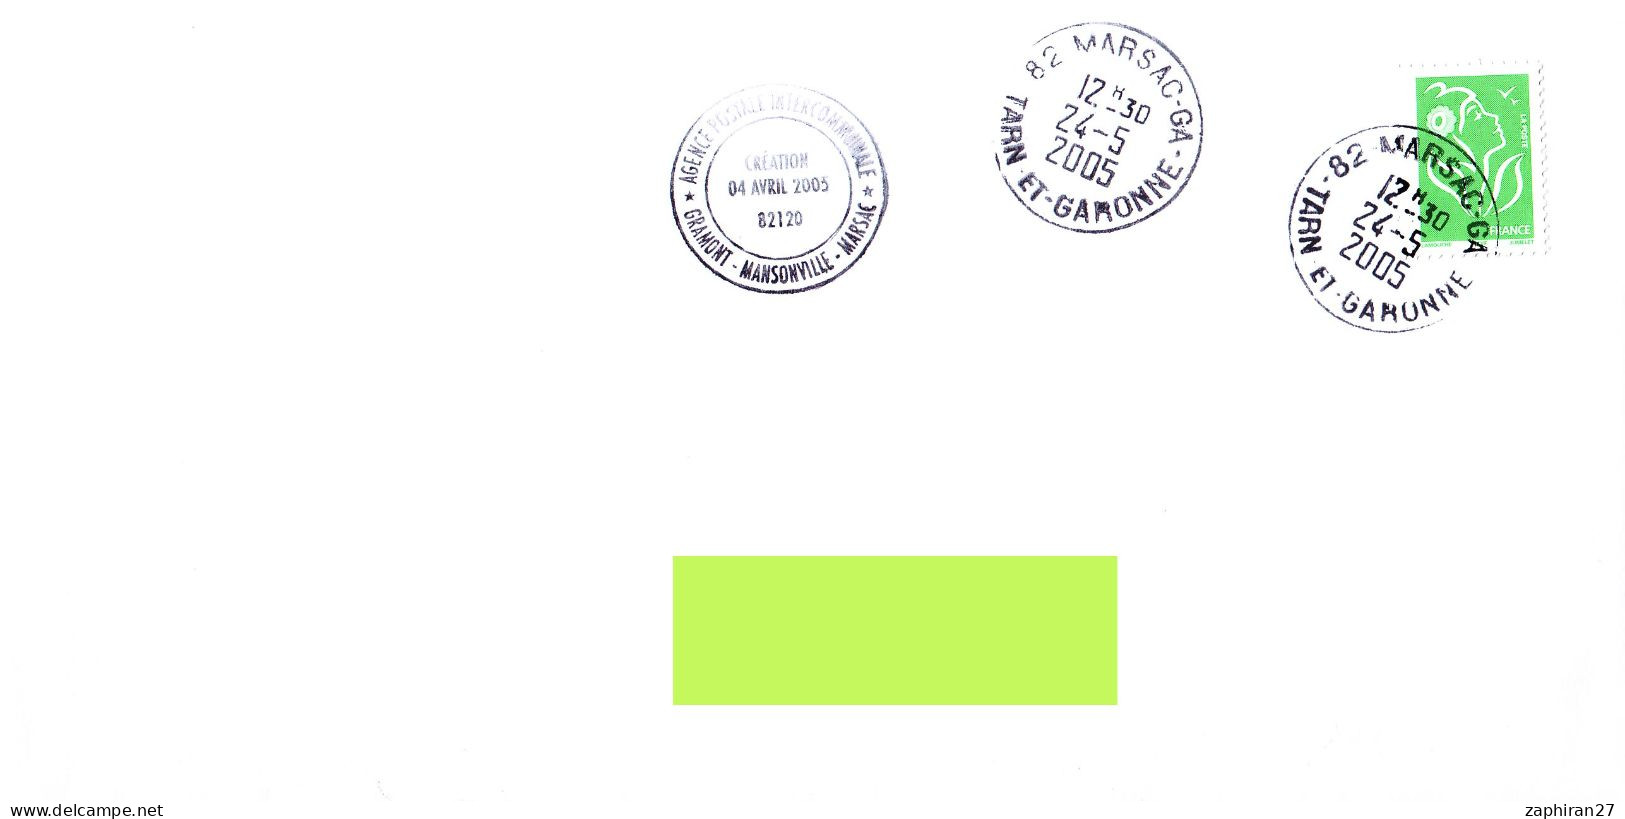 82 CACHET MANUEL : AGENCE POSTALE INTERCOM. CRAMONT MANSONVILLE MARSAC 4 Avrl 2005 DBLE COURONNE MARSAC GA  #925# - Manual Postmarks